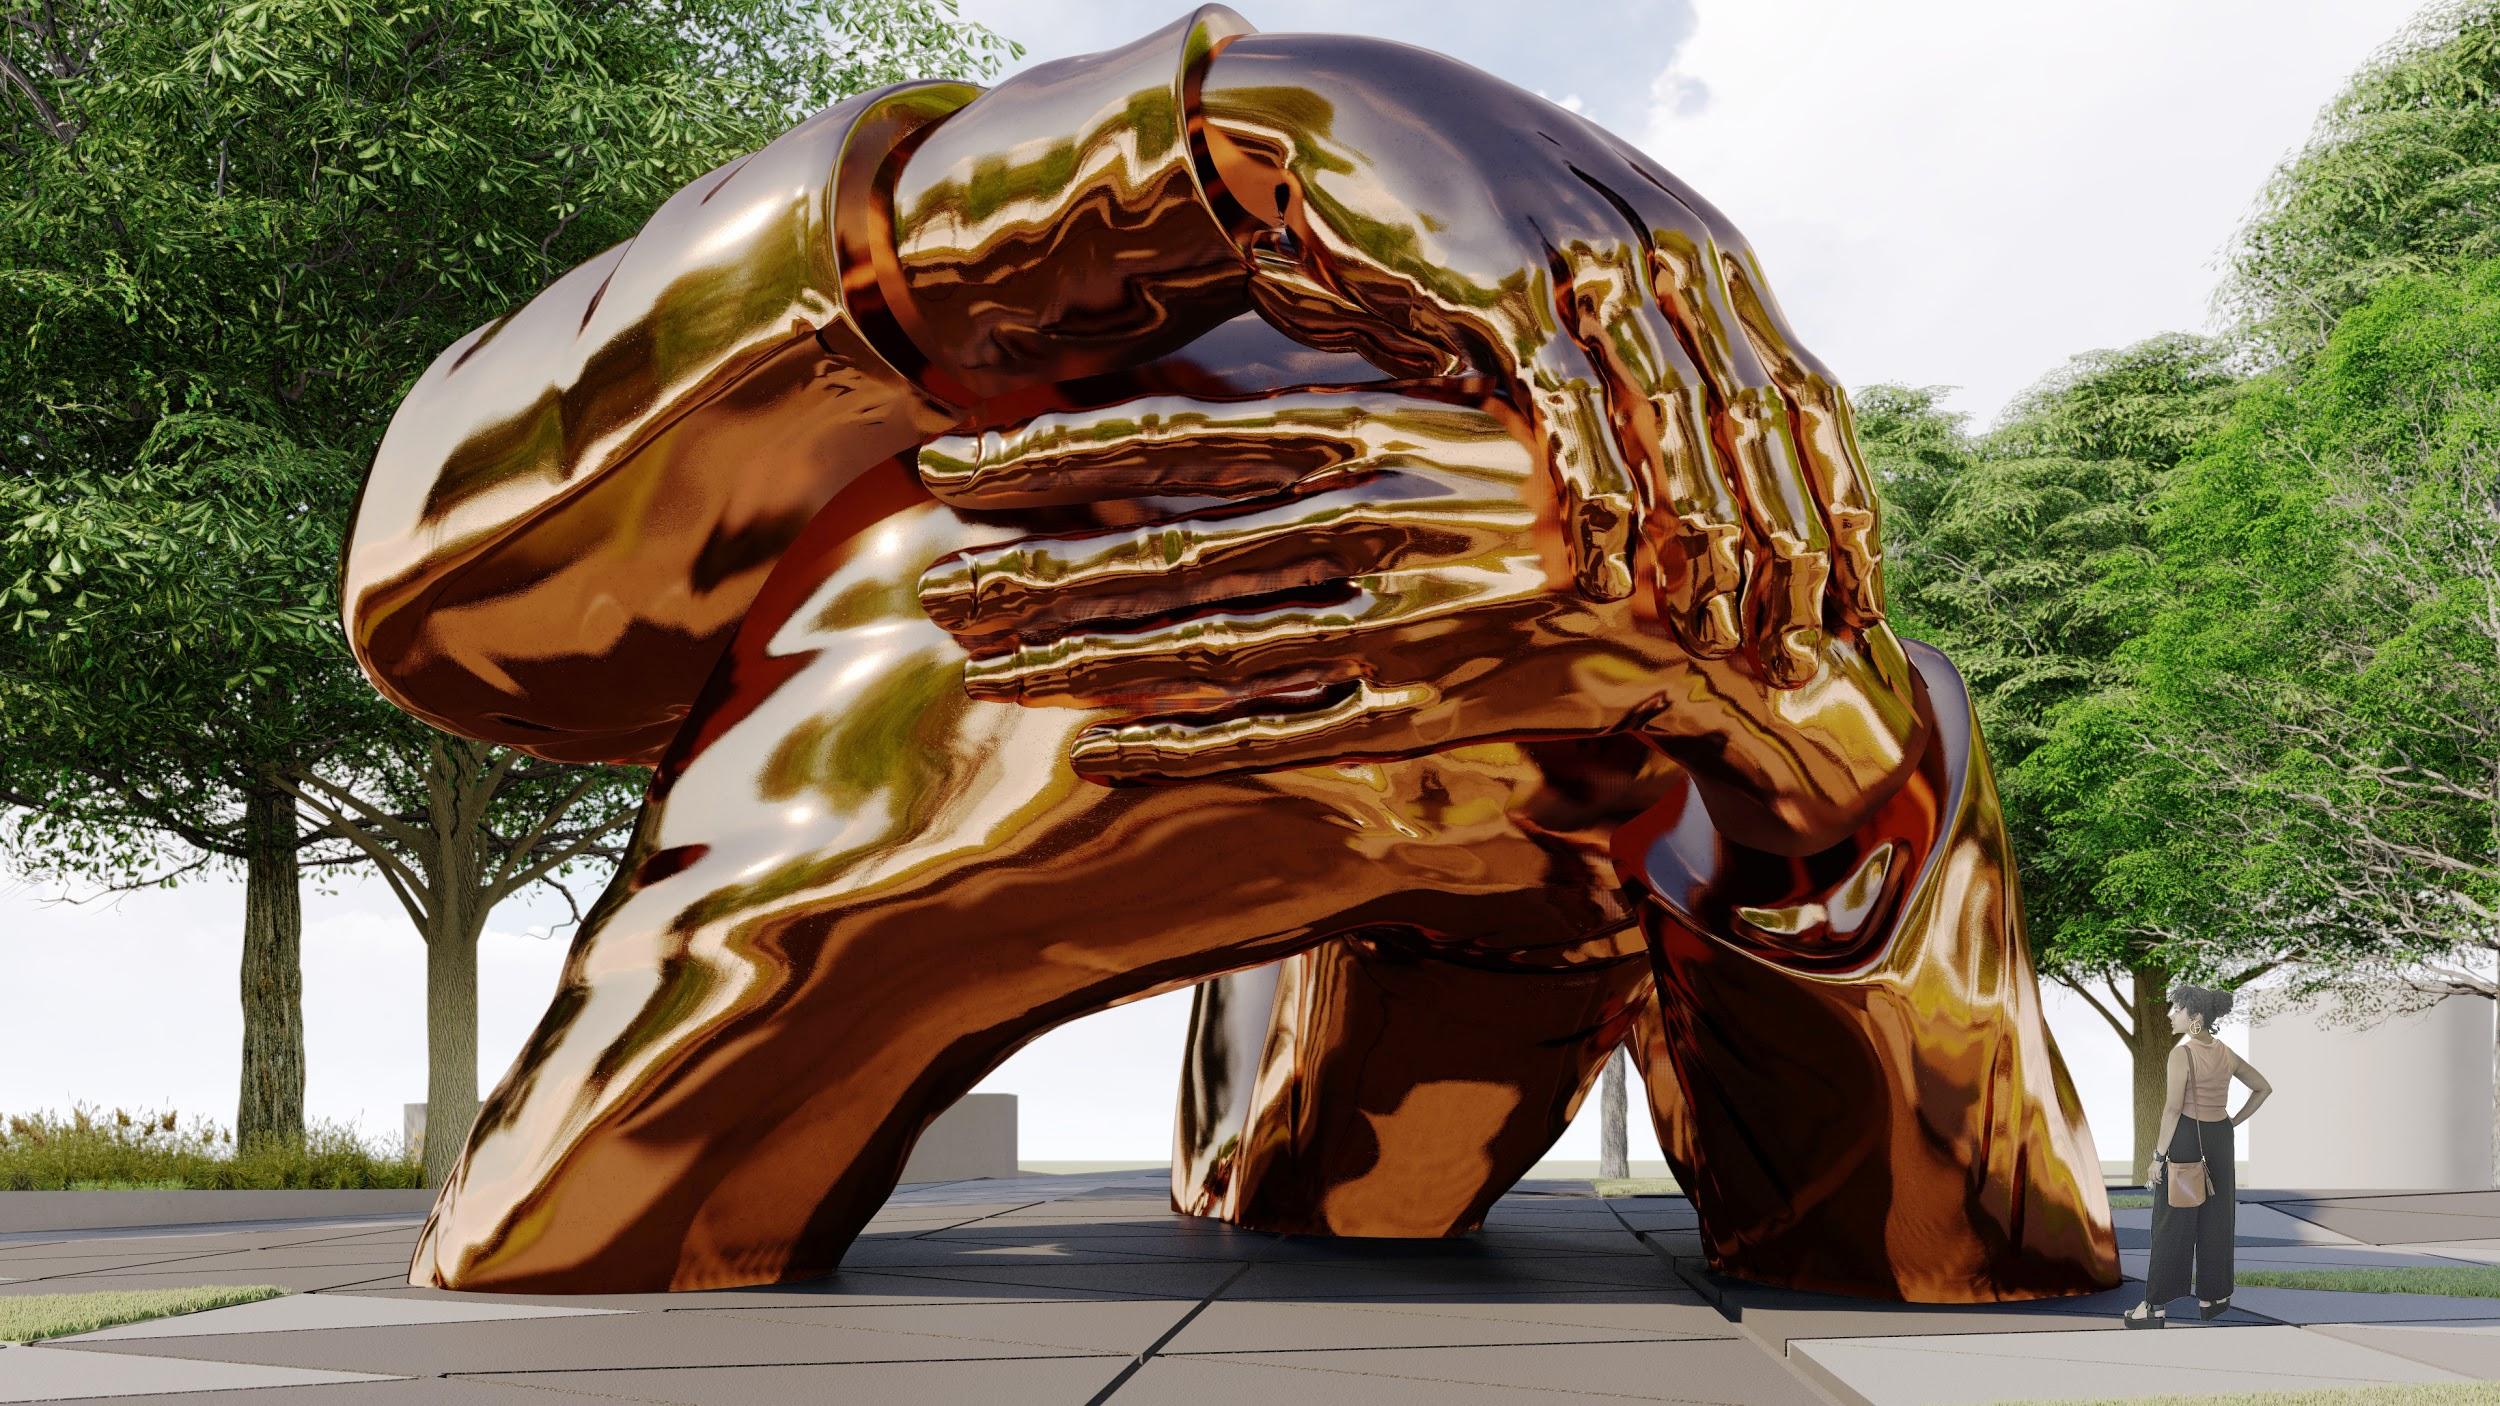 King Boston Embrace sculpture rendering